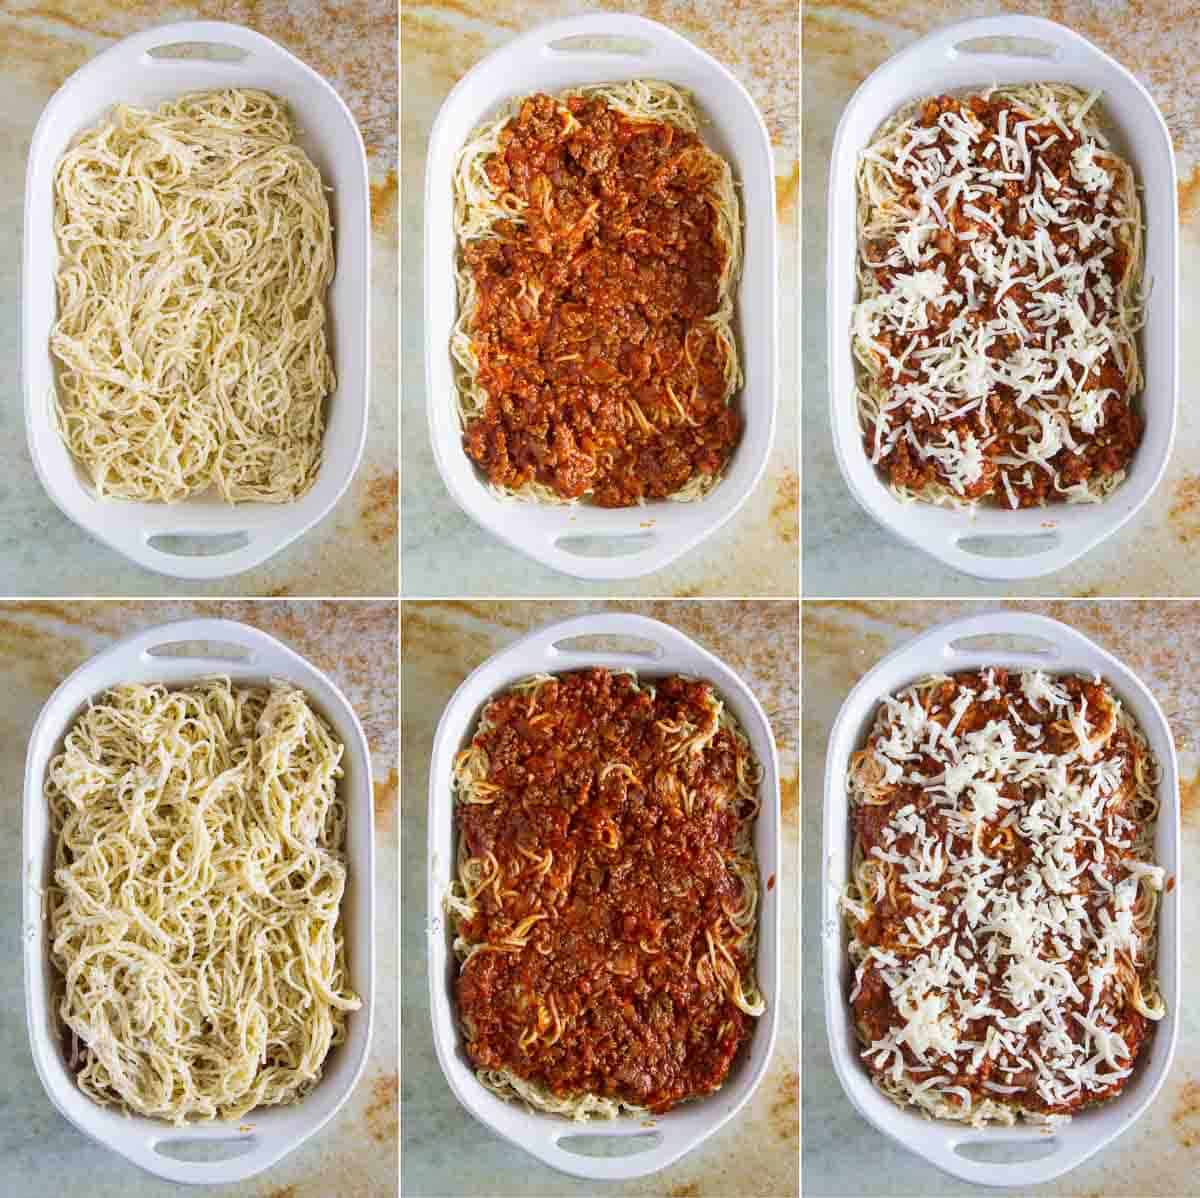 Steps to make spaghetti lasagna.